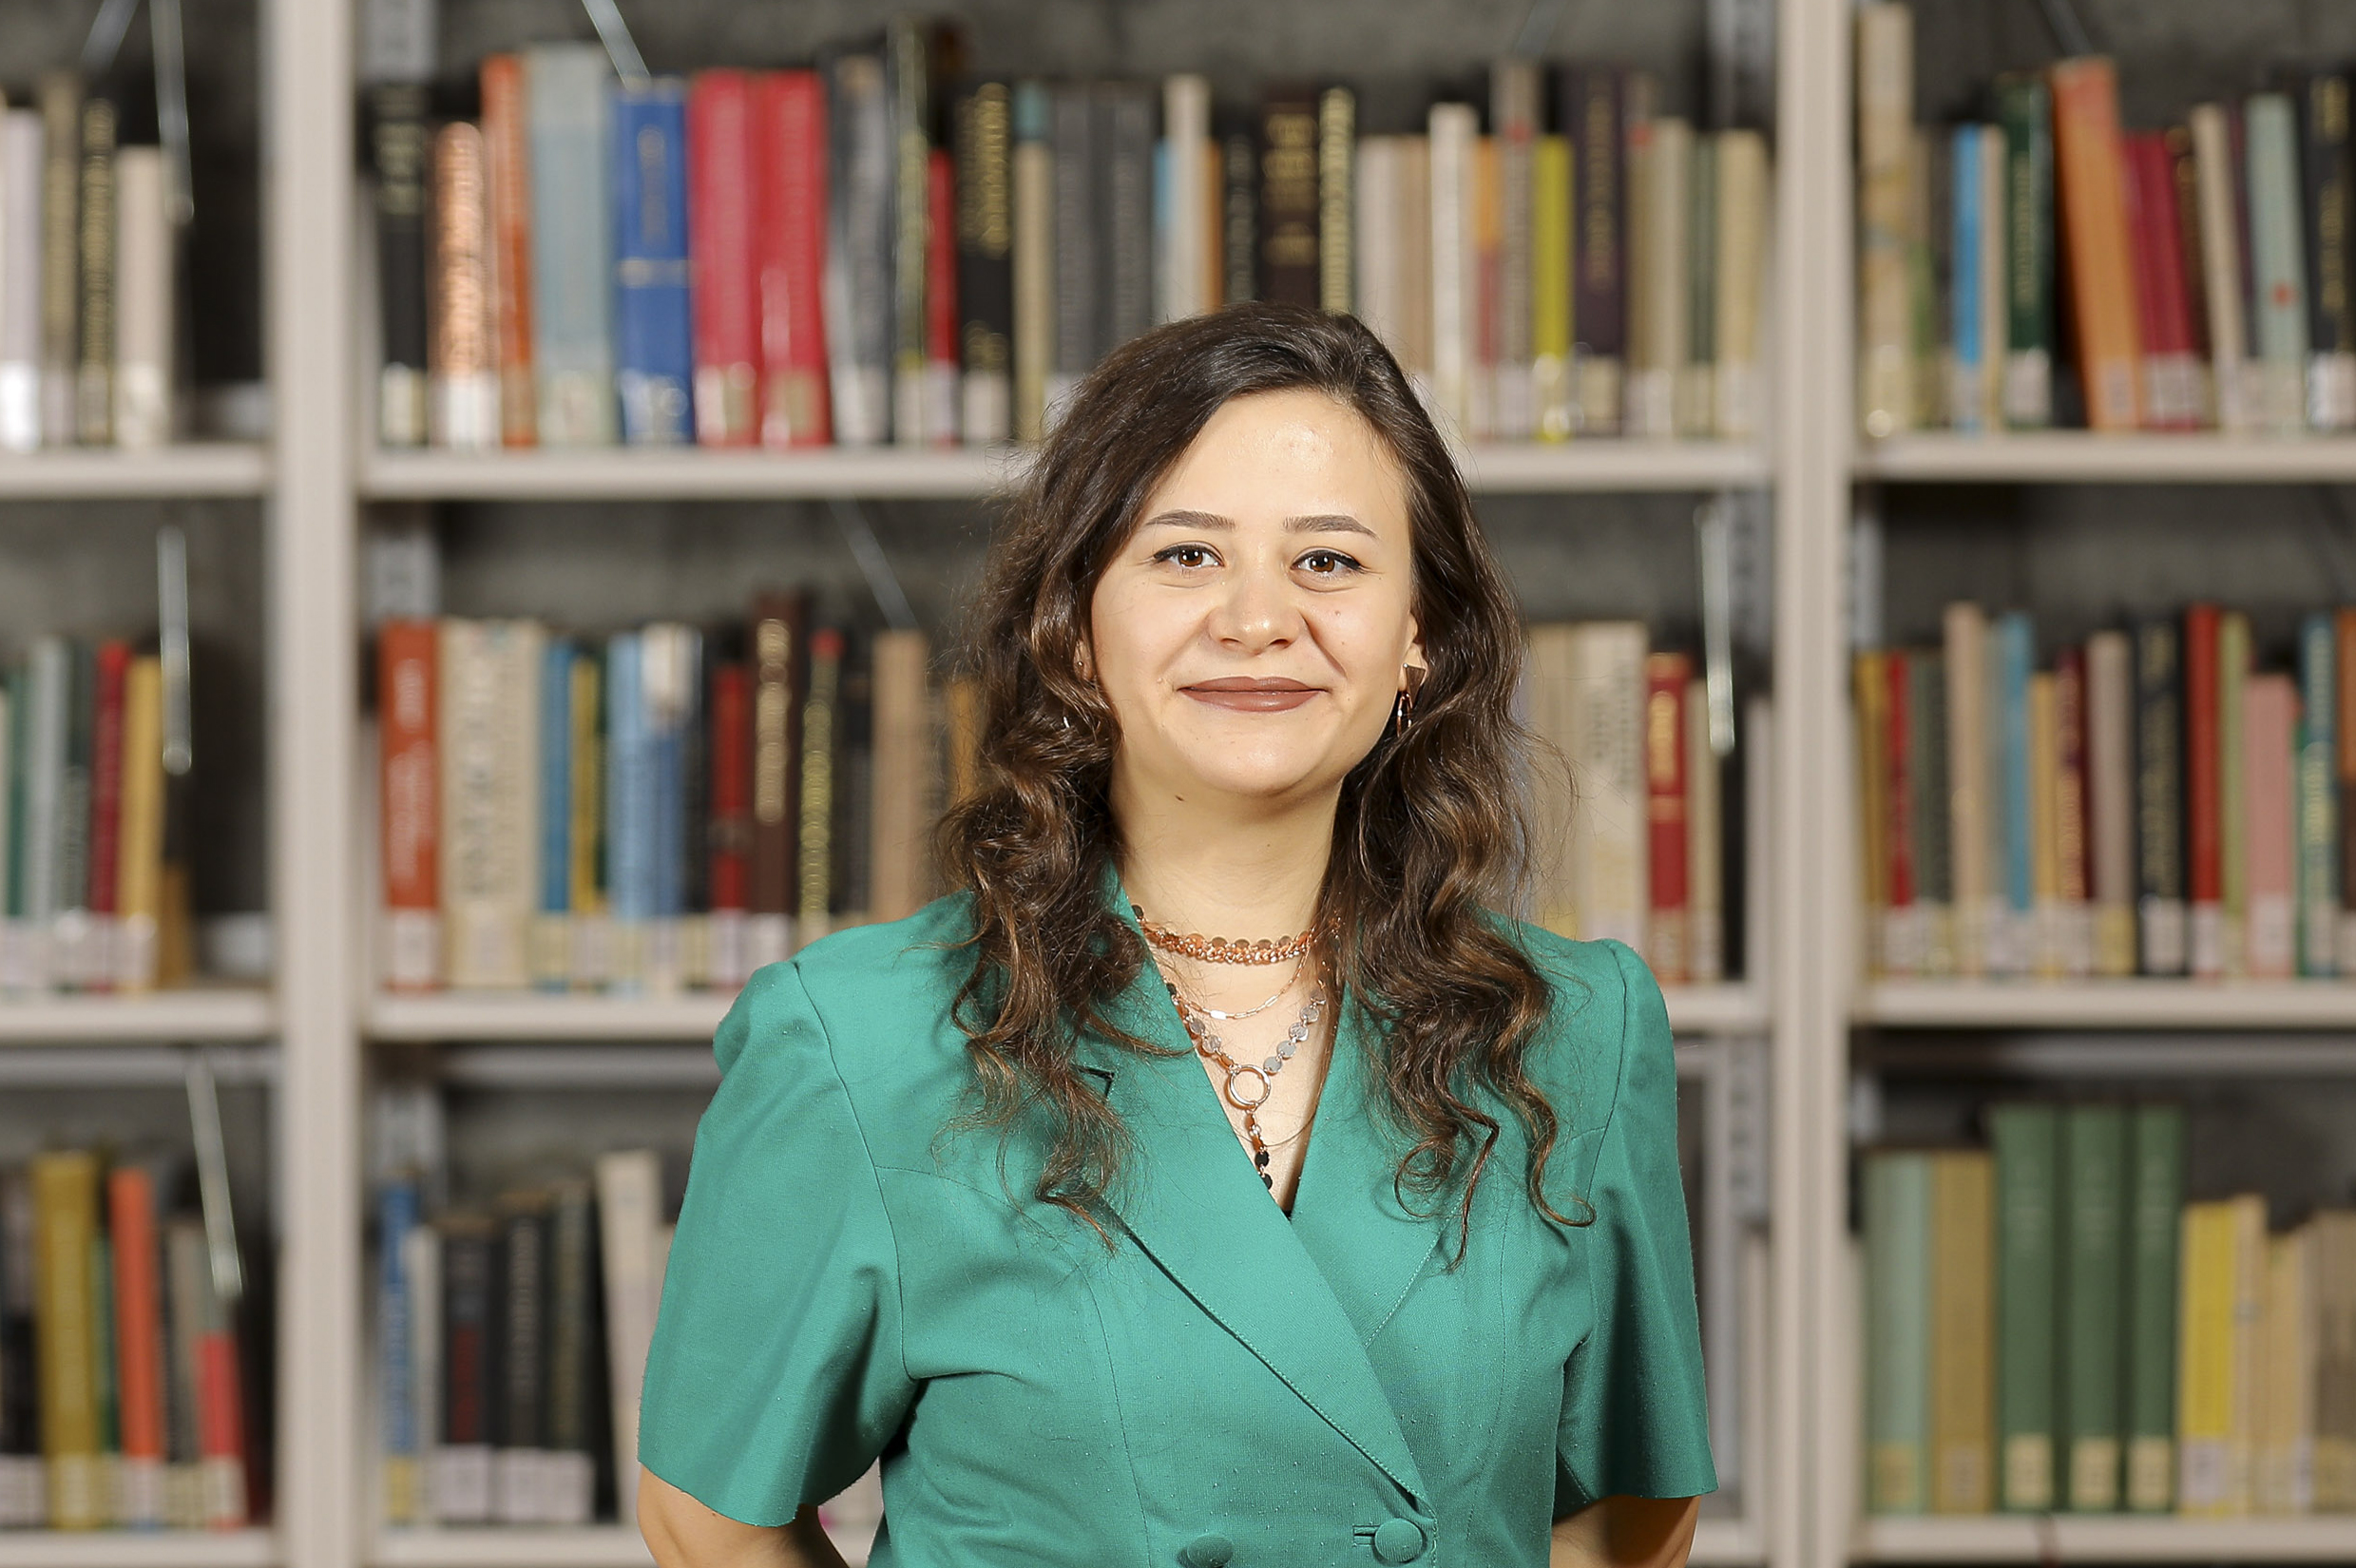 Assistant Librarian Fatma Akyol